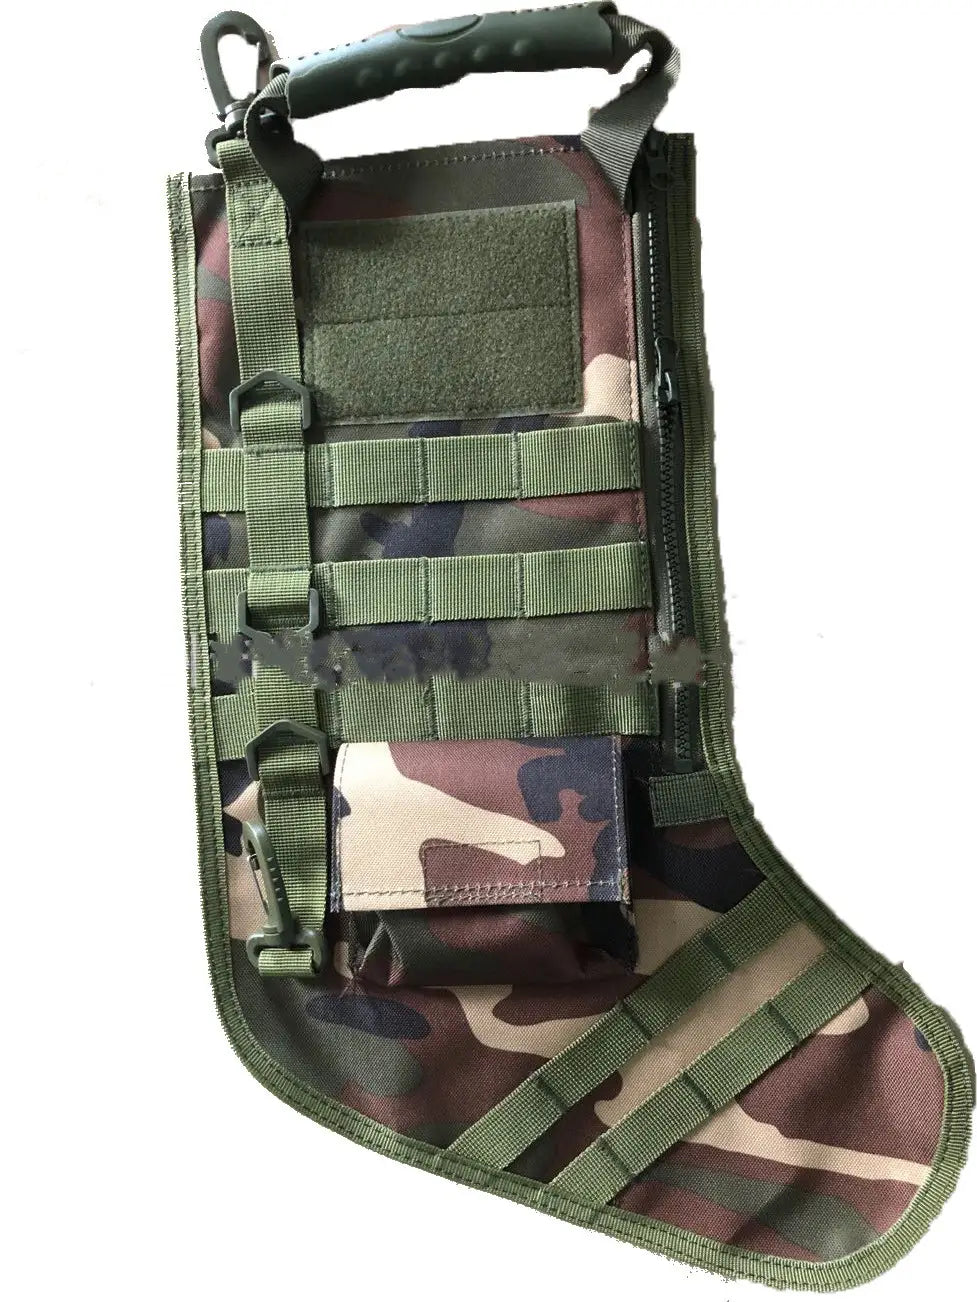 Lovemi - Christmas Socks Bag Military Bag Accessories